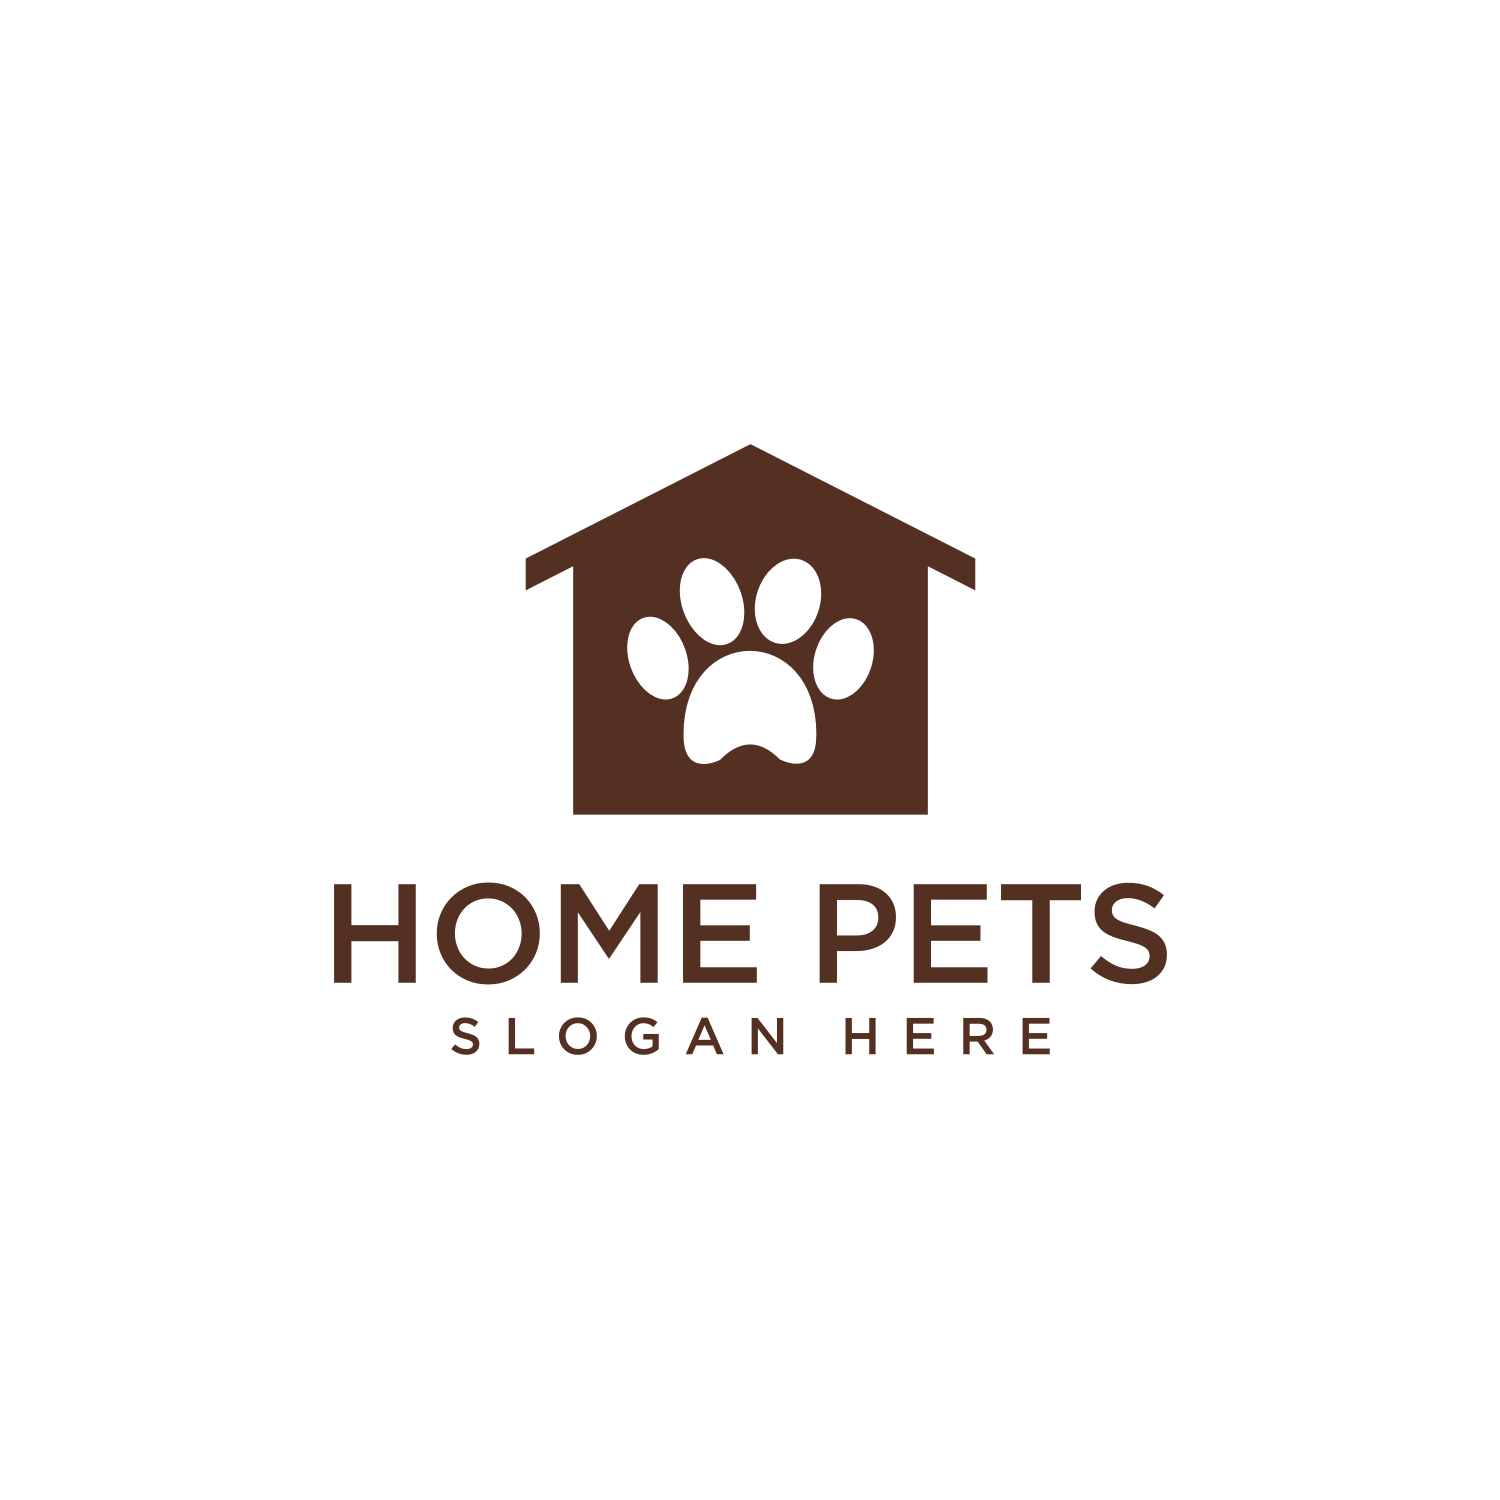 Pets Home Logo Vector Design presentation.